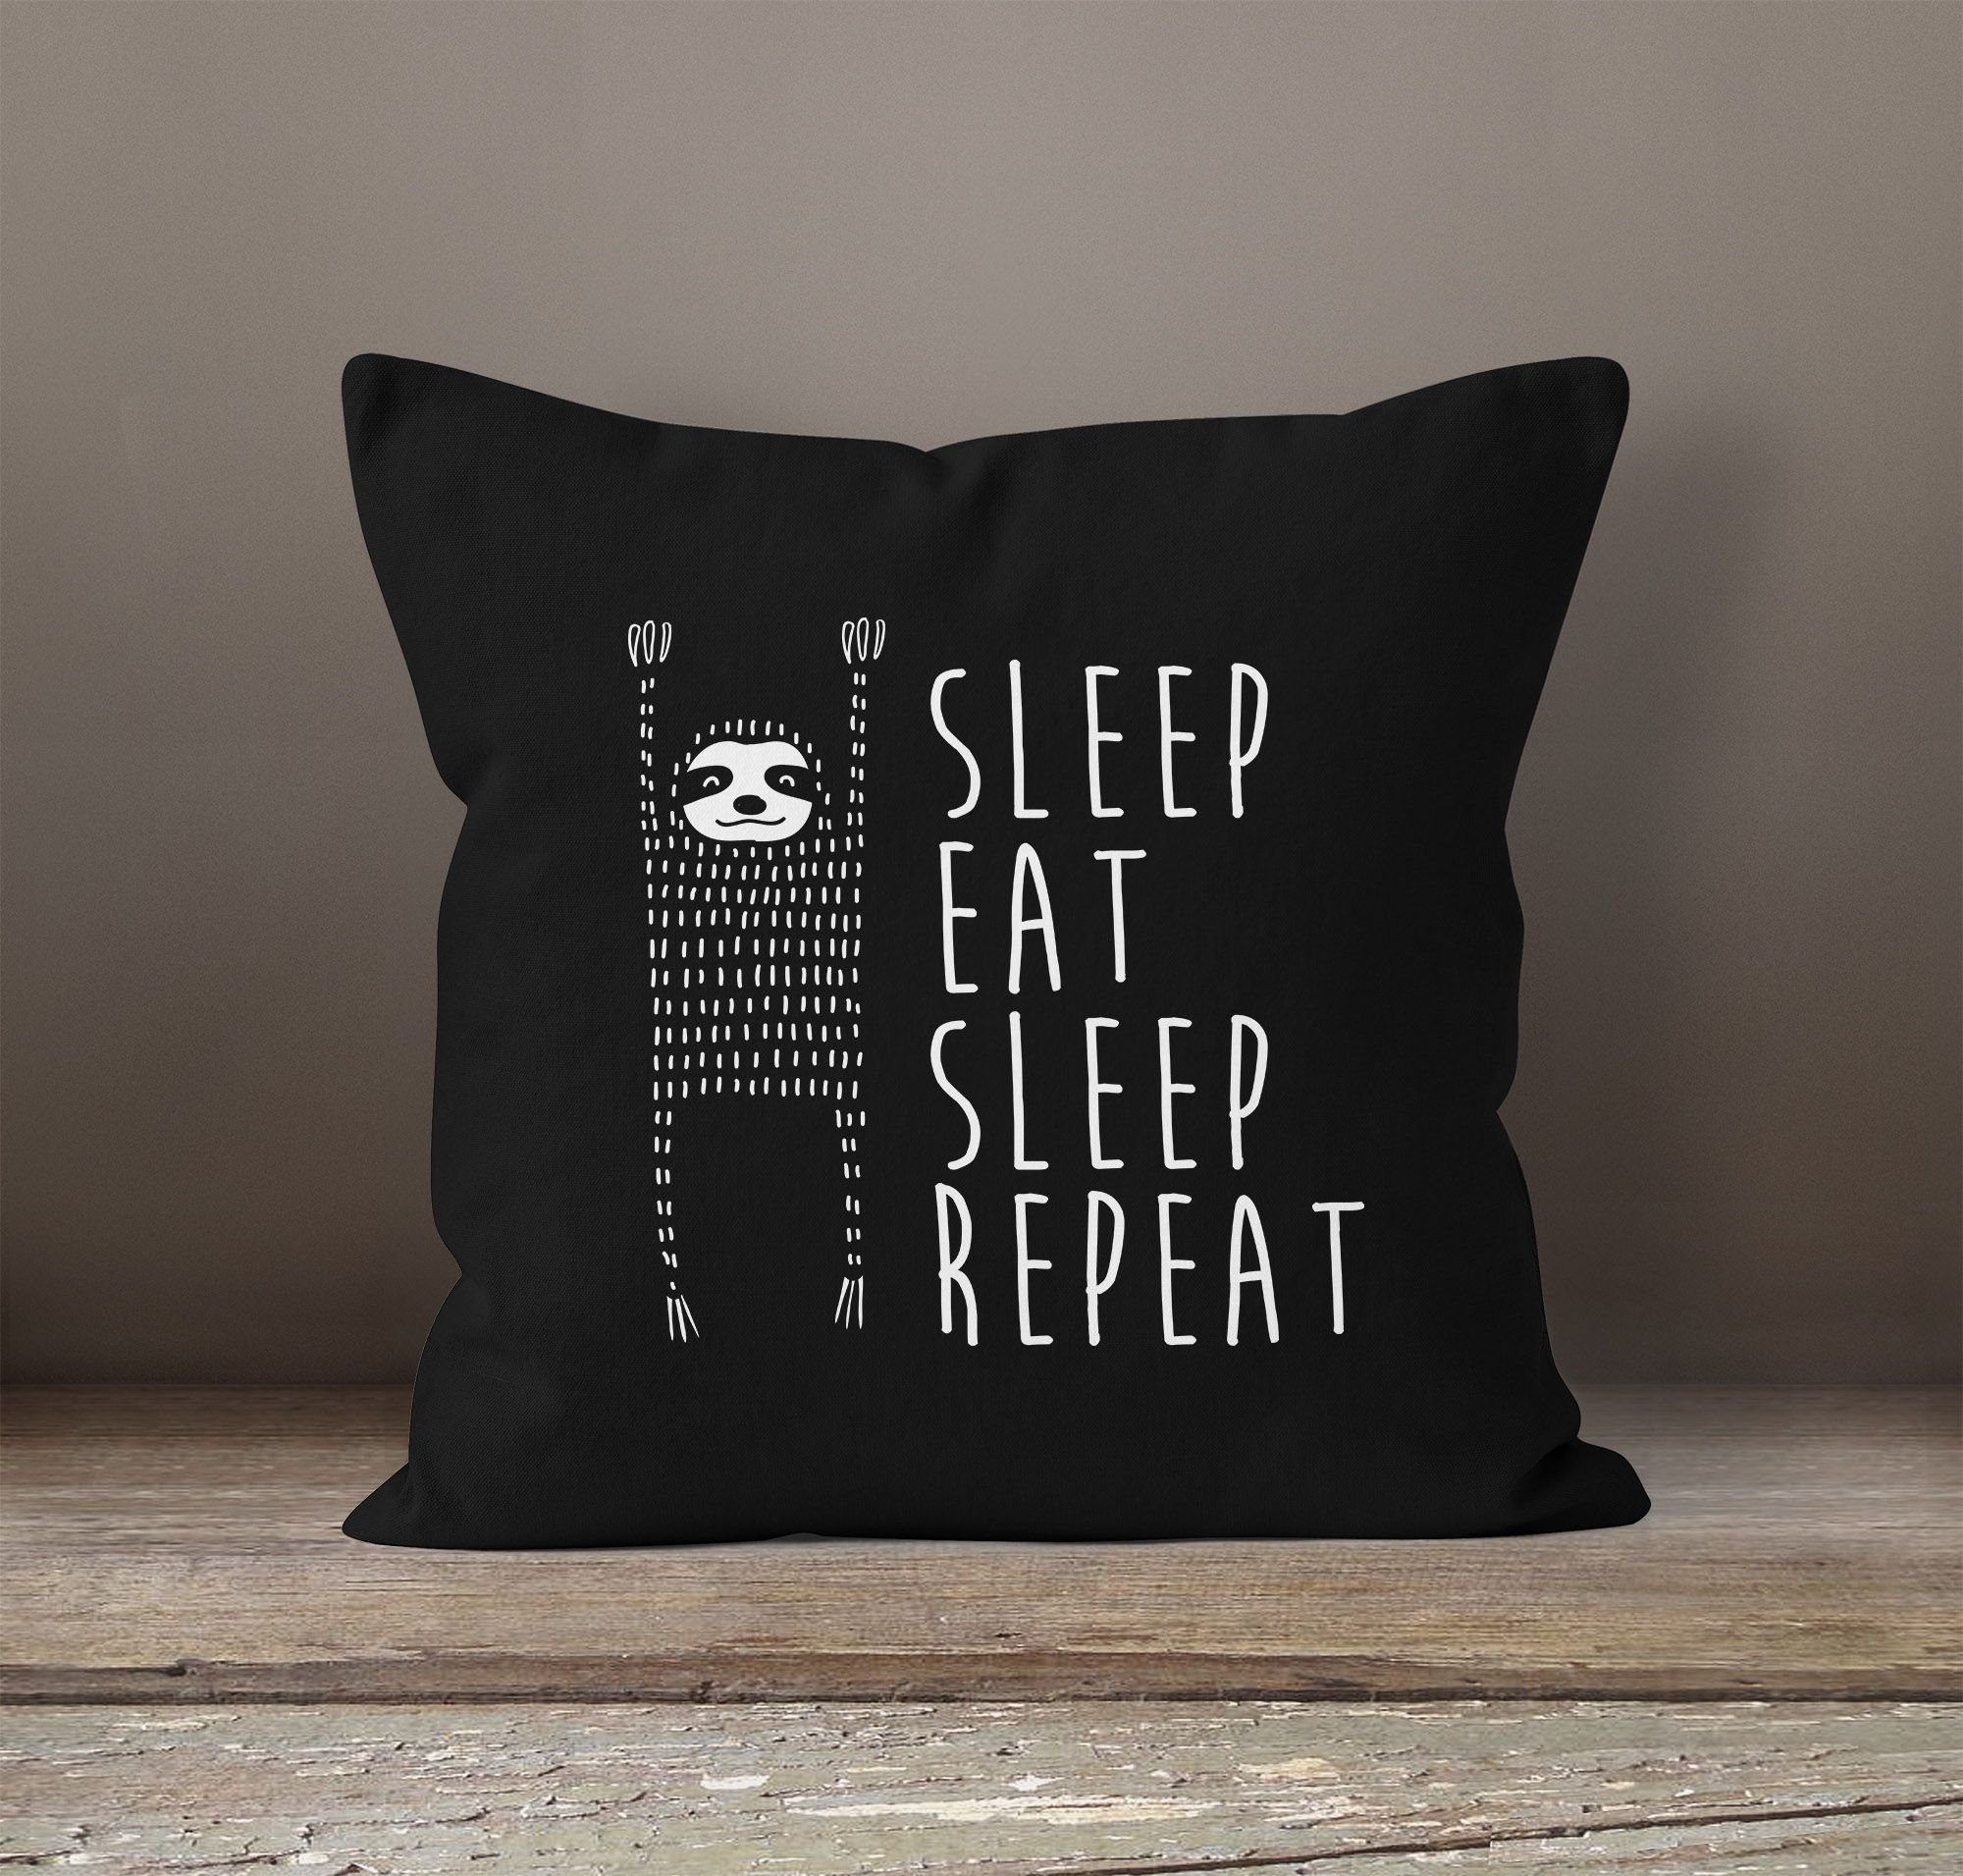 Repeat eat Dekokissen schwarz Moonworks® Baumwolle Kissenbezug 40x40 Sleep Sleep MoonWorks Faultier lustiger